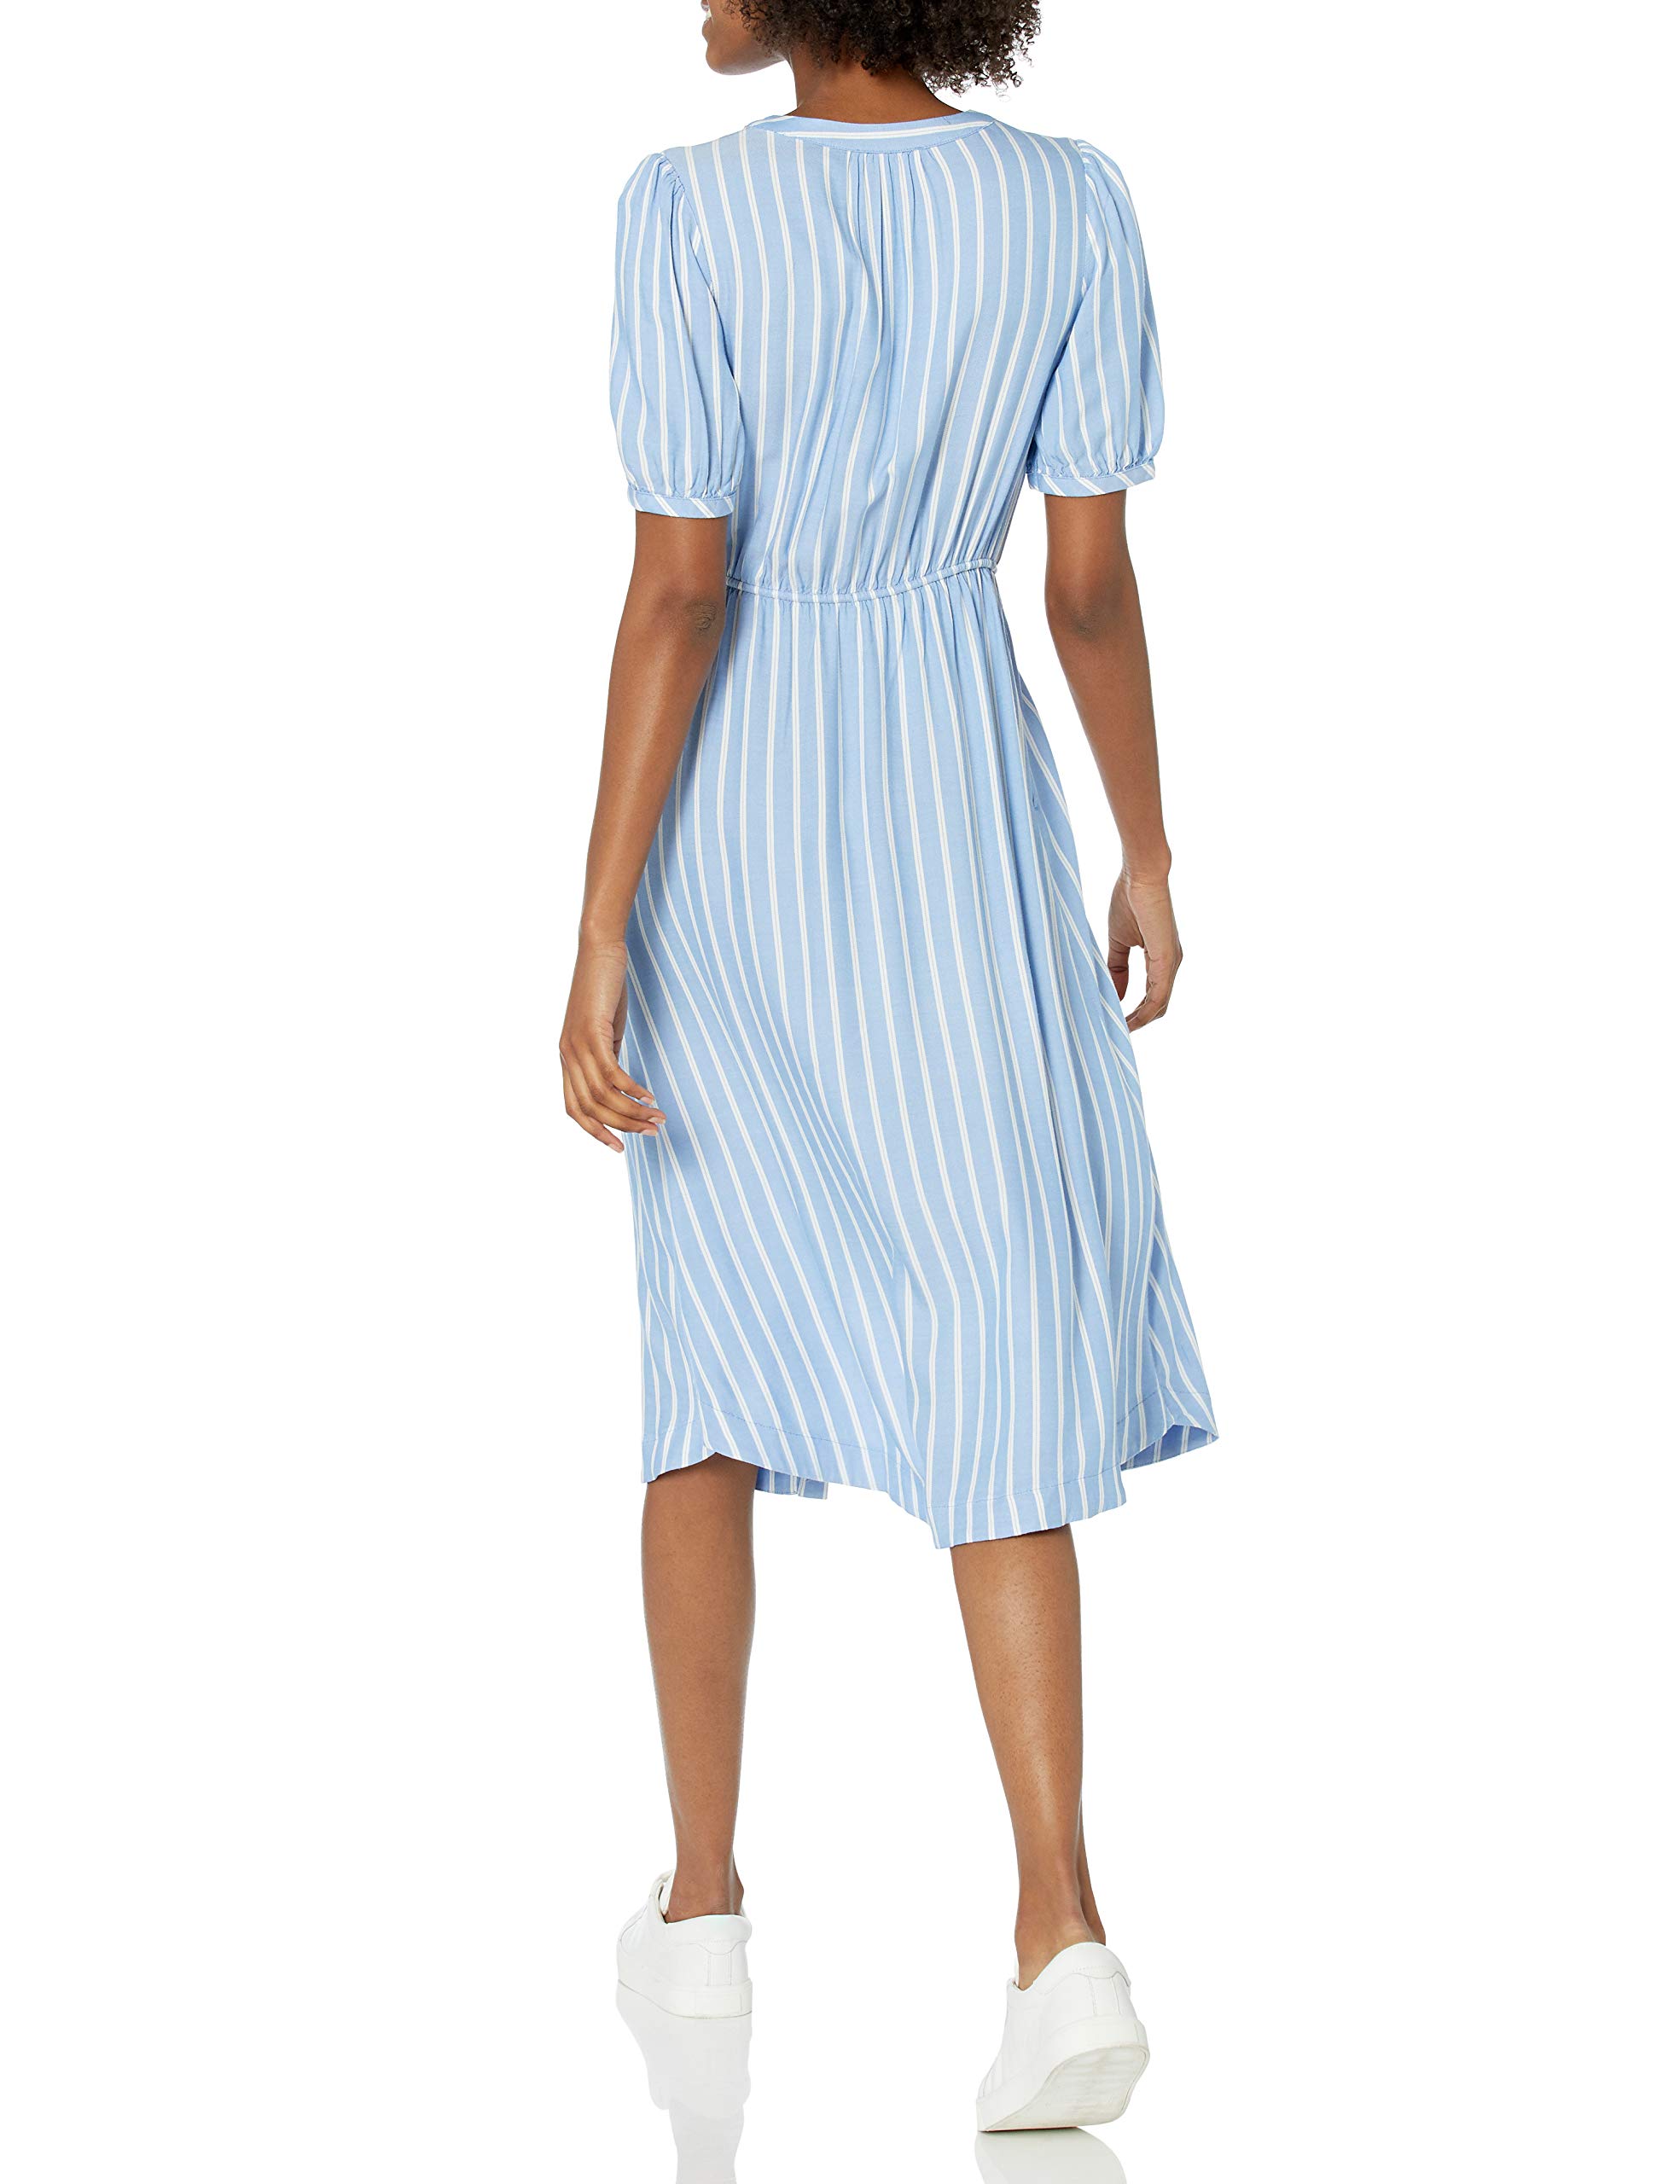 Amazon Essentials Women's Half-Sleeve Waisted Midi A-Line Dress, Blue/White, French Stripe, Large